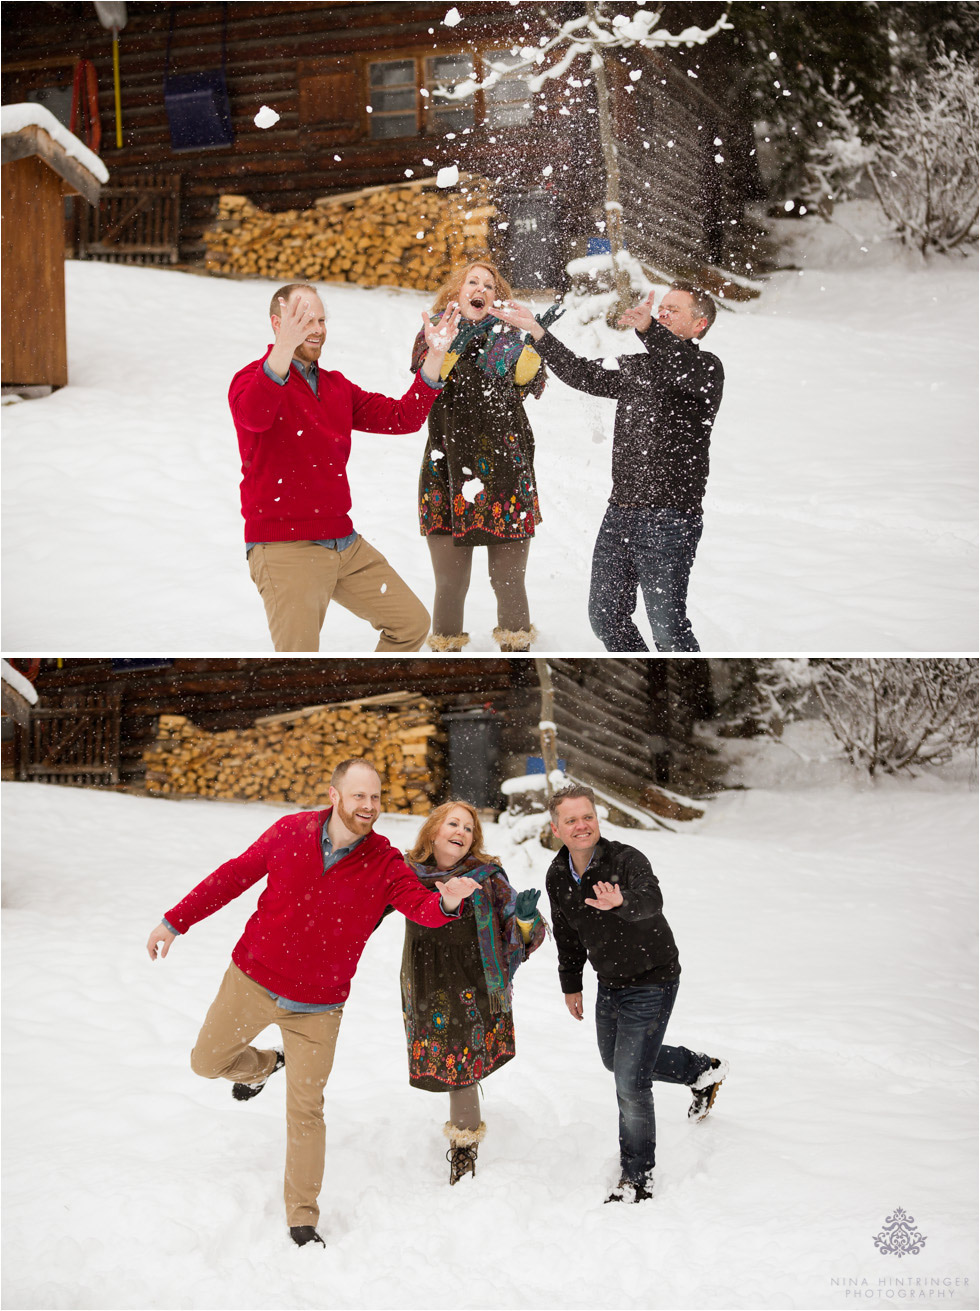 Portrait shoots | United States meet snowy St. Anton - Blog of Nina Hintringer Photography - Wedding Photography, Wedding Reportage and Destination Weddings